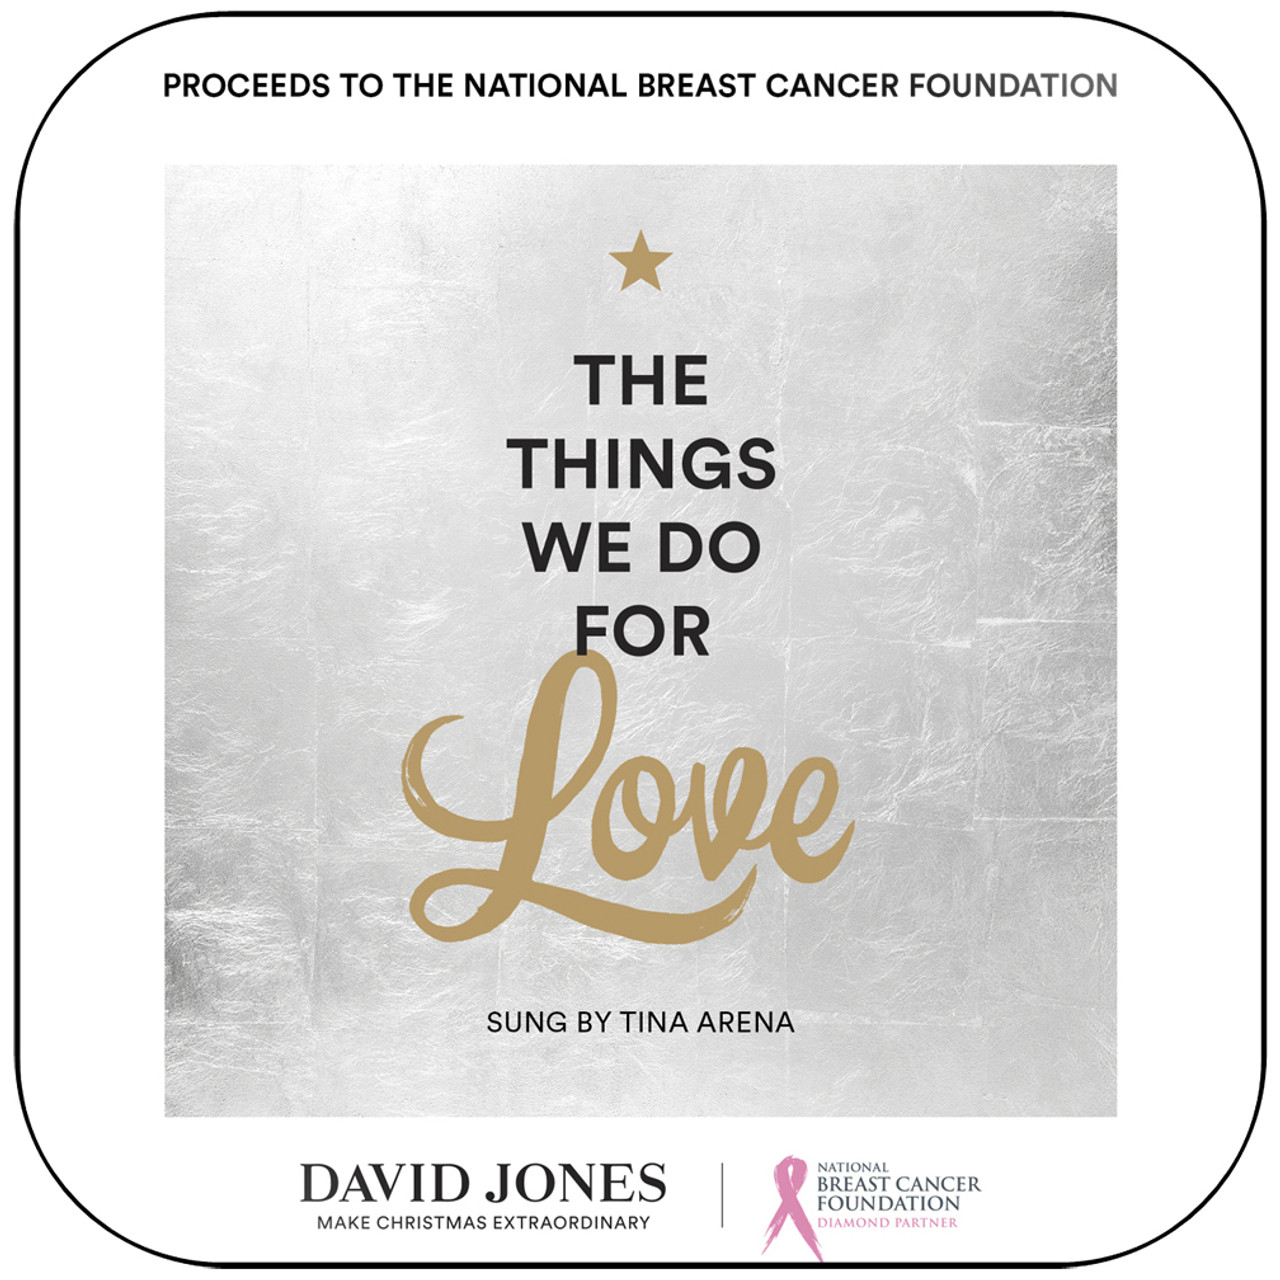 David Jones  National Breast Cancer Foundation